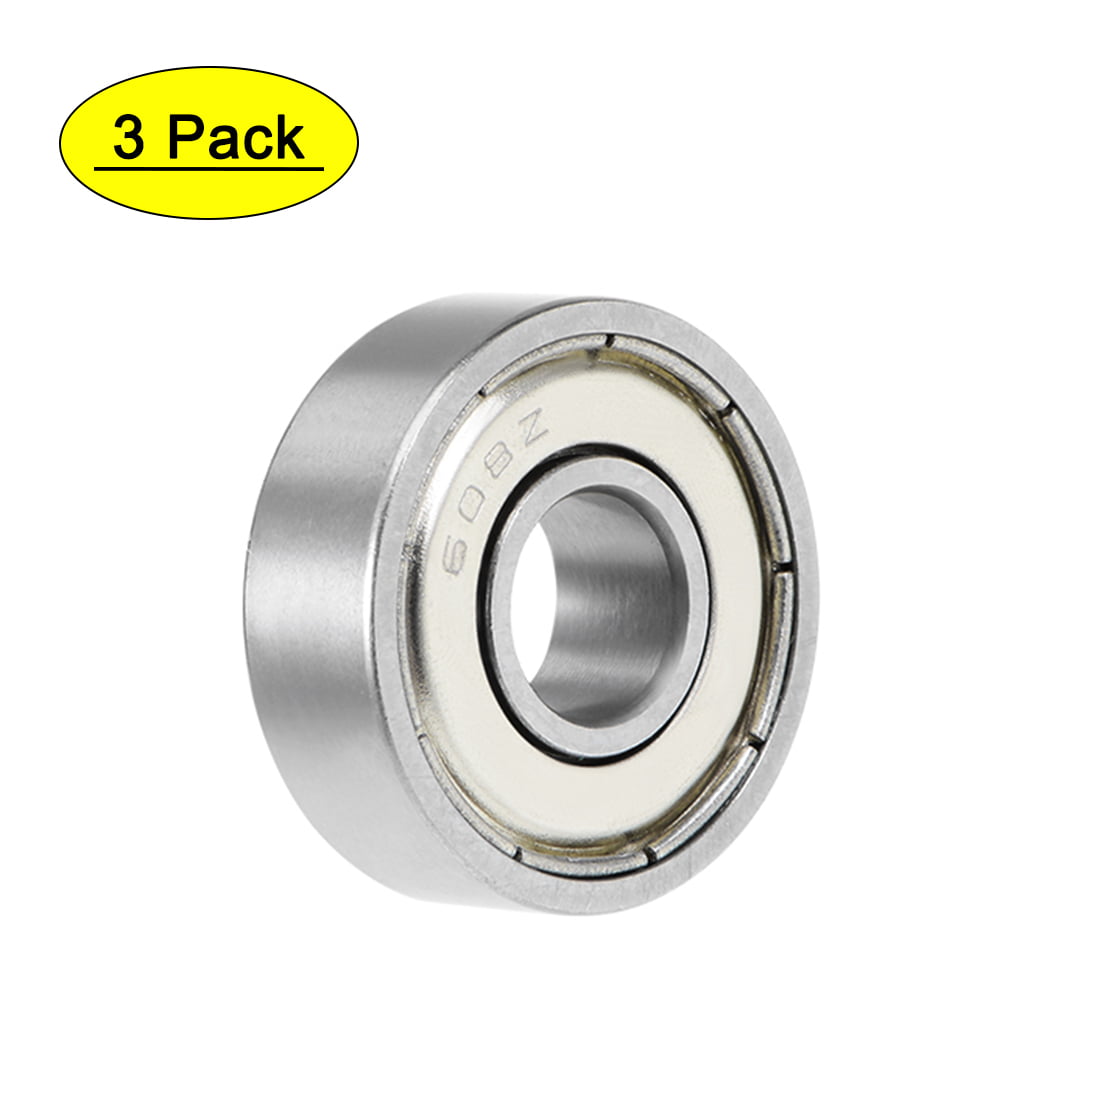 Lot of 250 Dia 3.5mm Diameter Chrome Steel Bearing Balls G25 Quality Small/Mini 